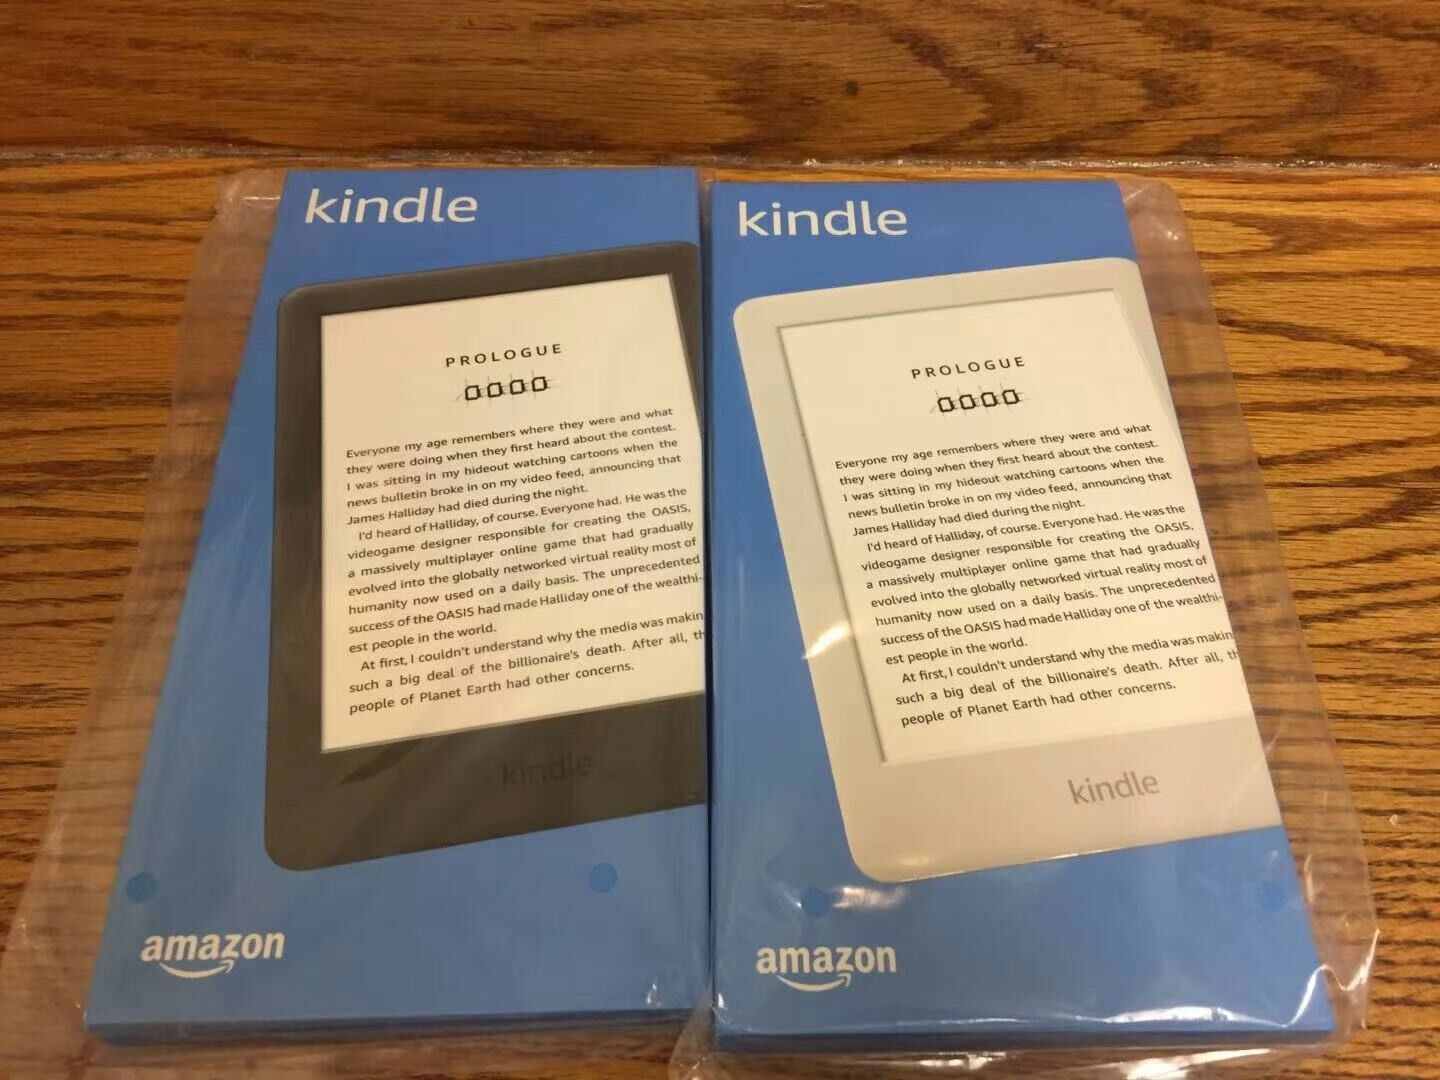 Brand New Amazon 6" Kindle 10th Generation eBook Reader 8 GB - Black or White Black Kindle